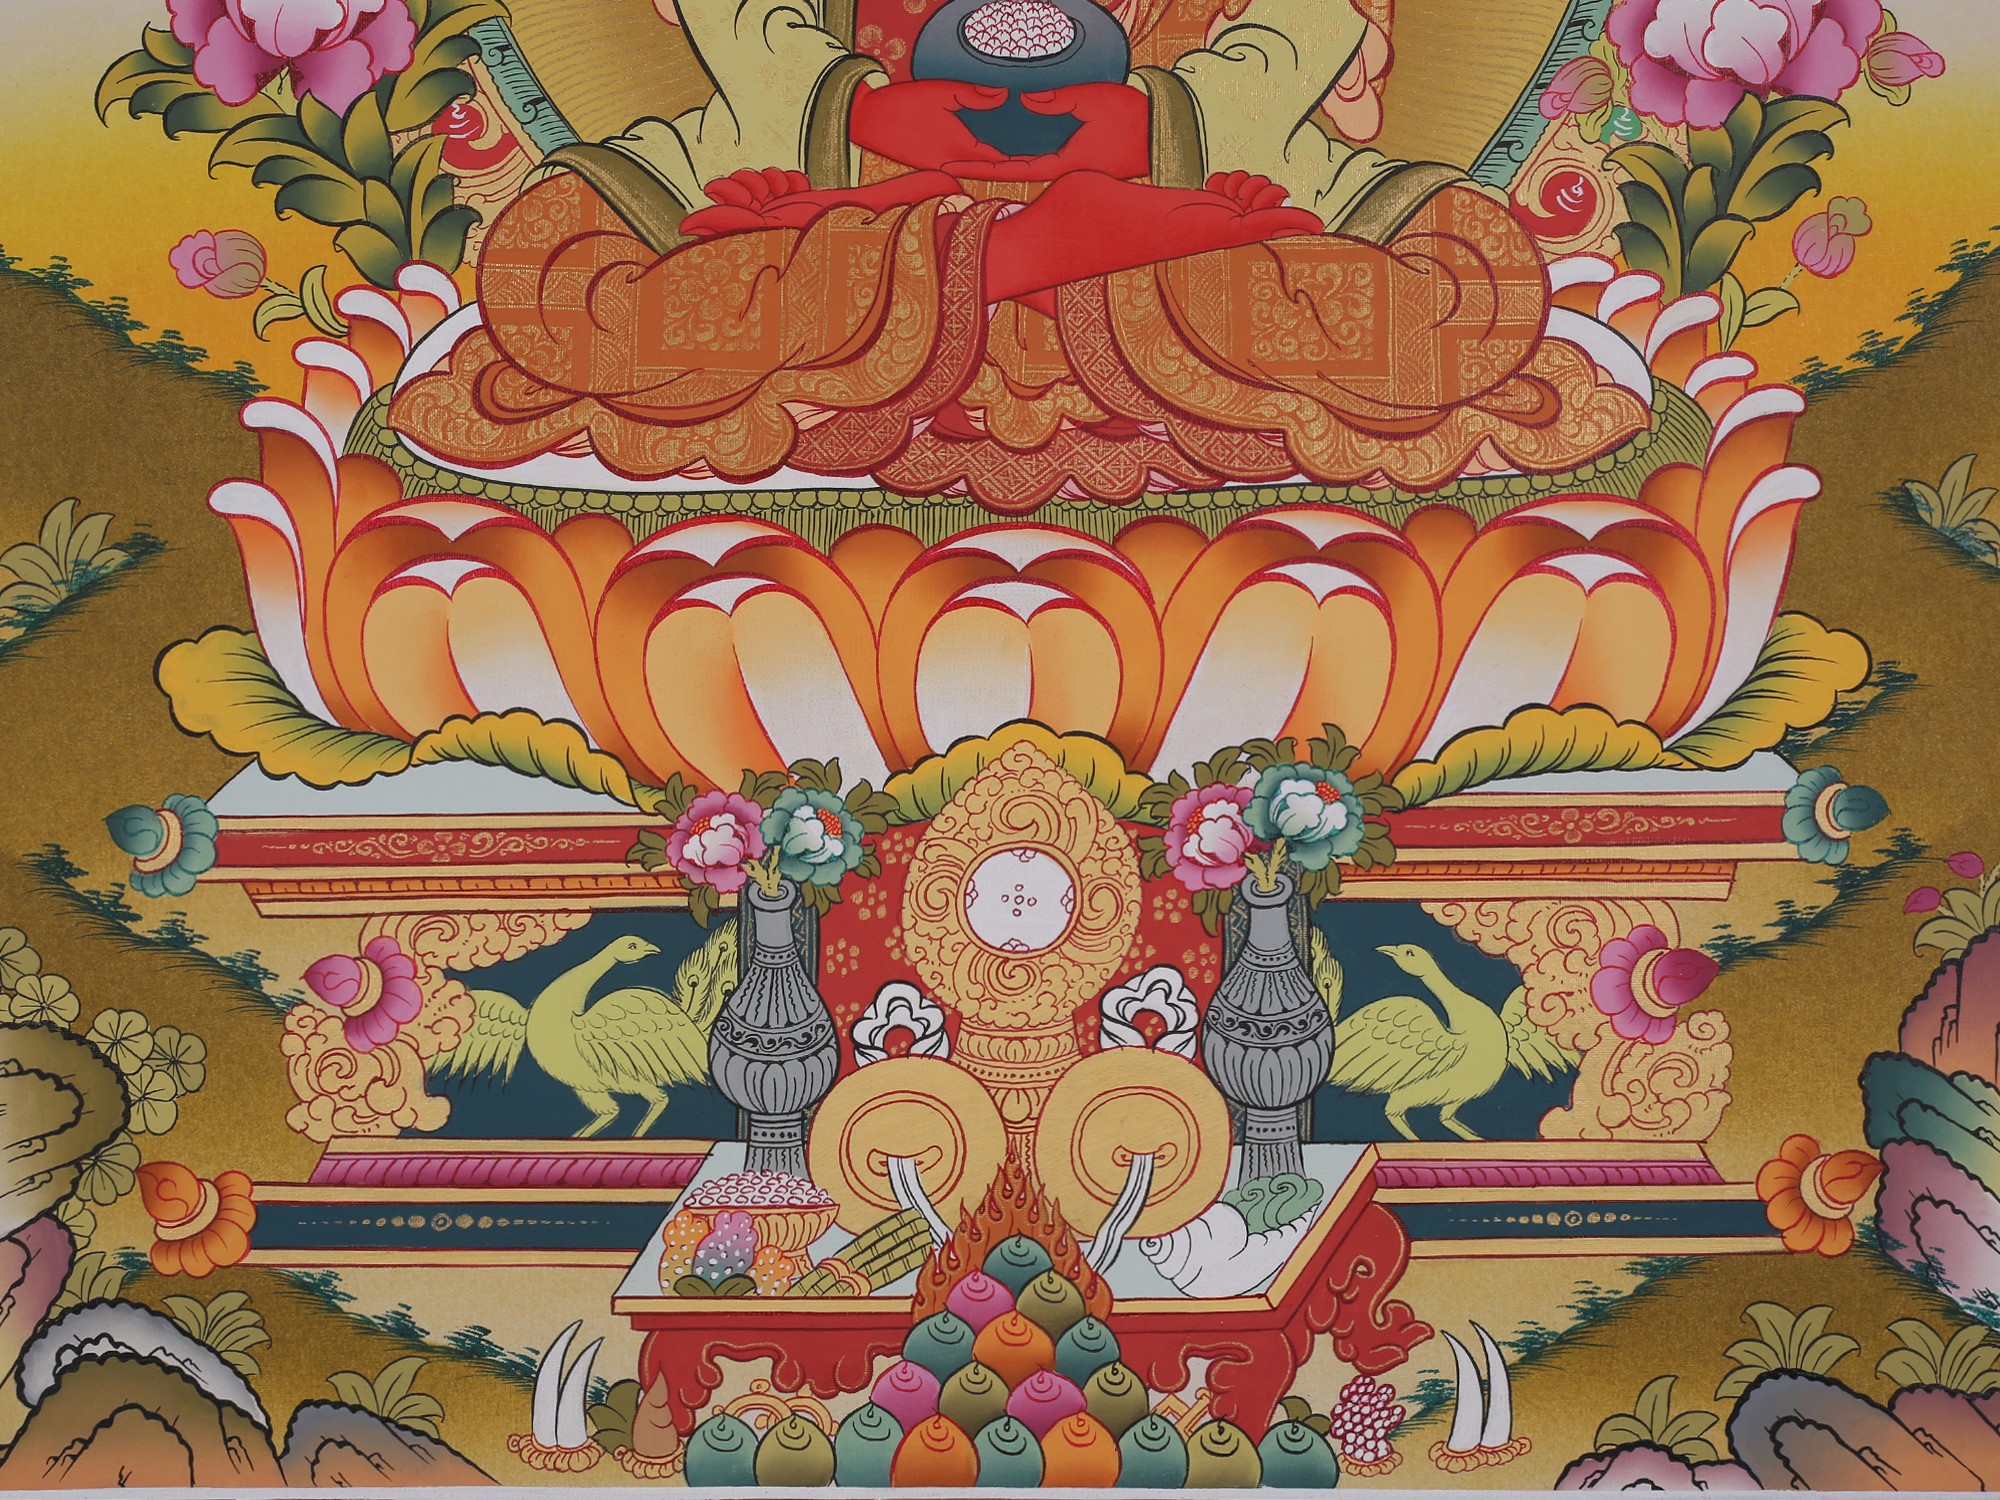 Amitabha Buddha (Brocadeless Thangka) | Exotic India Art